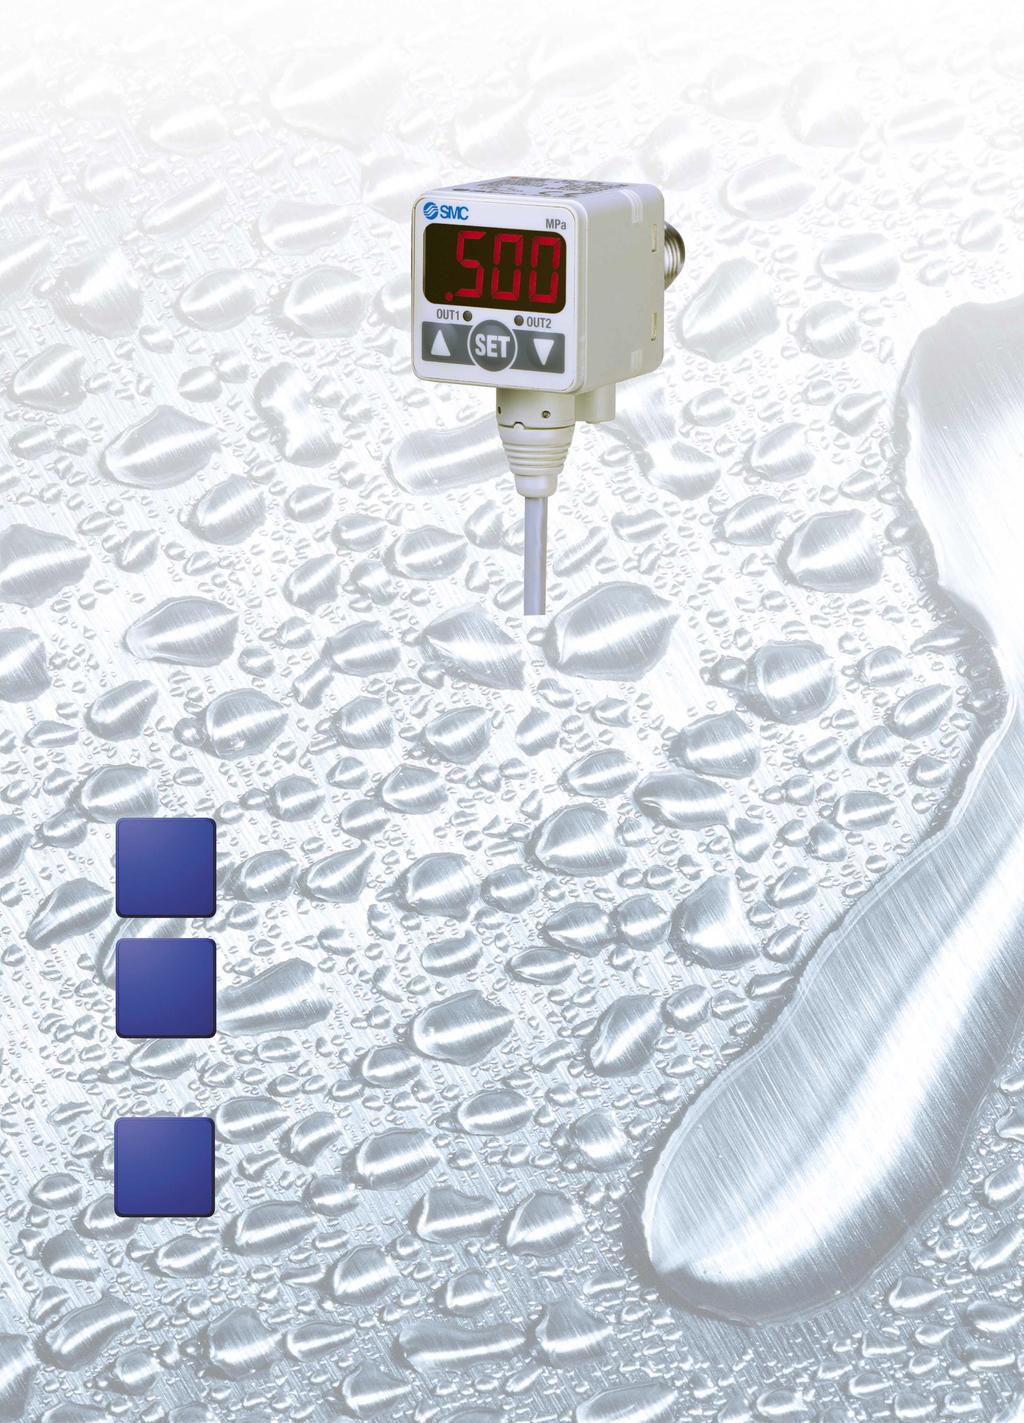 Pressure detection for a wide range of fluids.